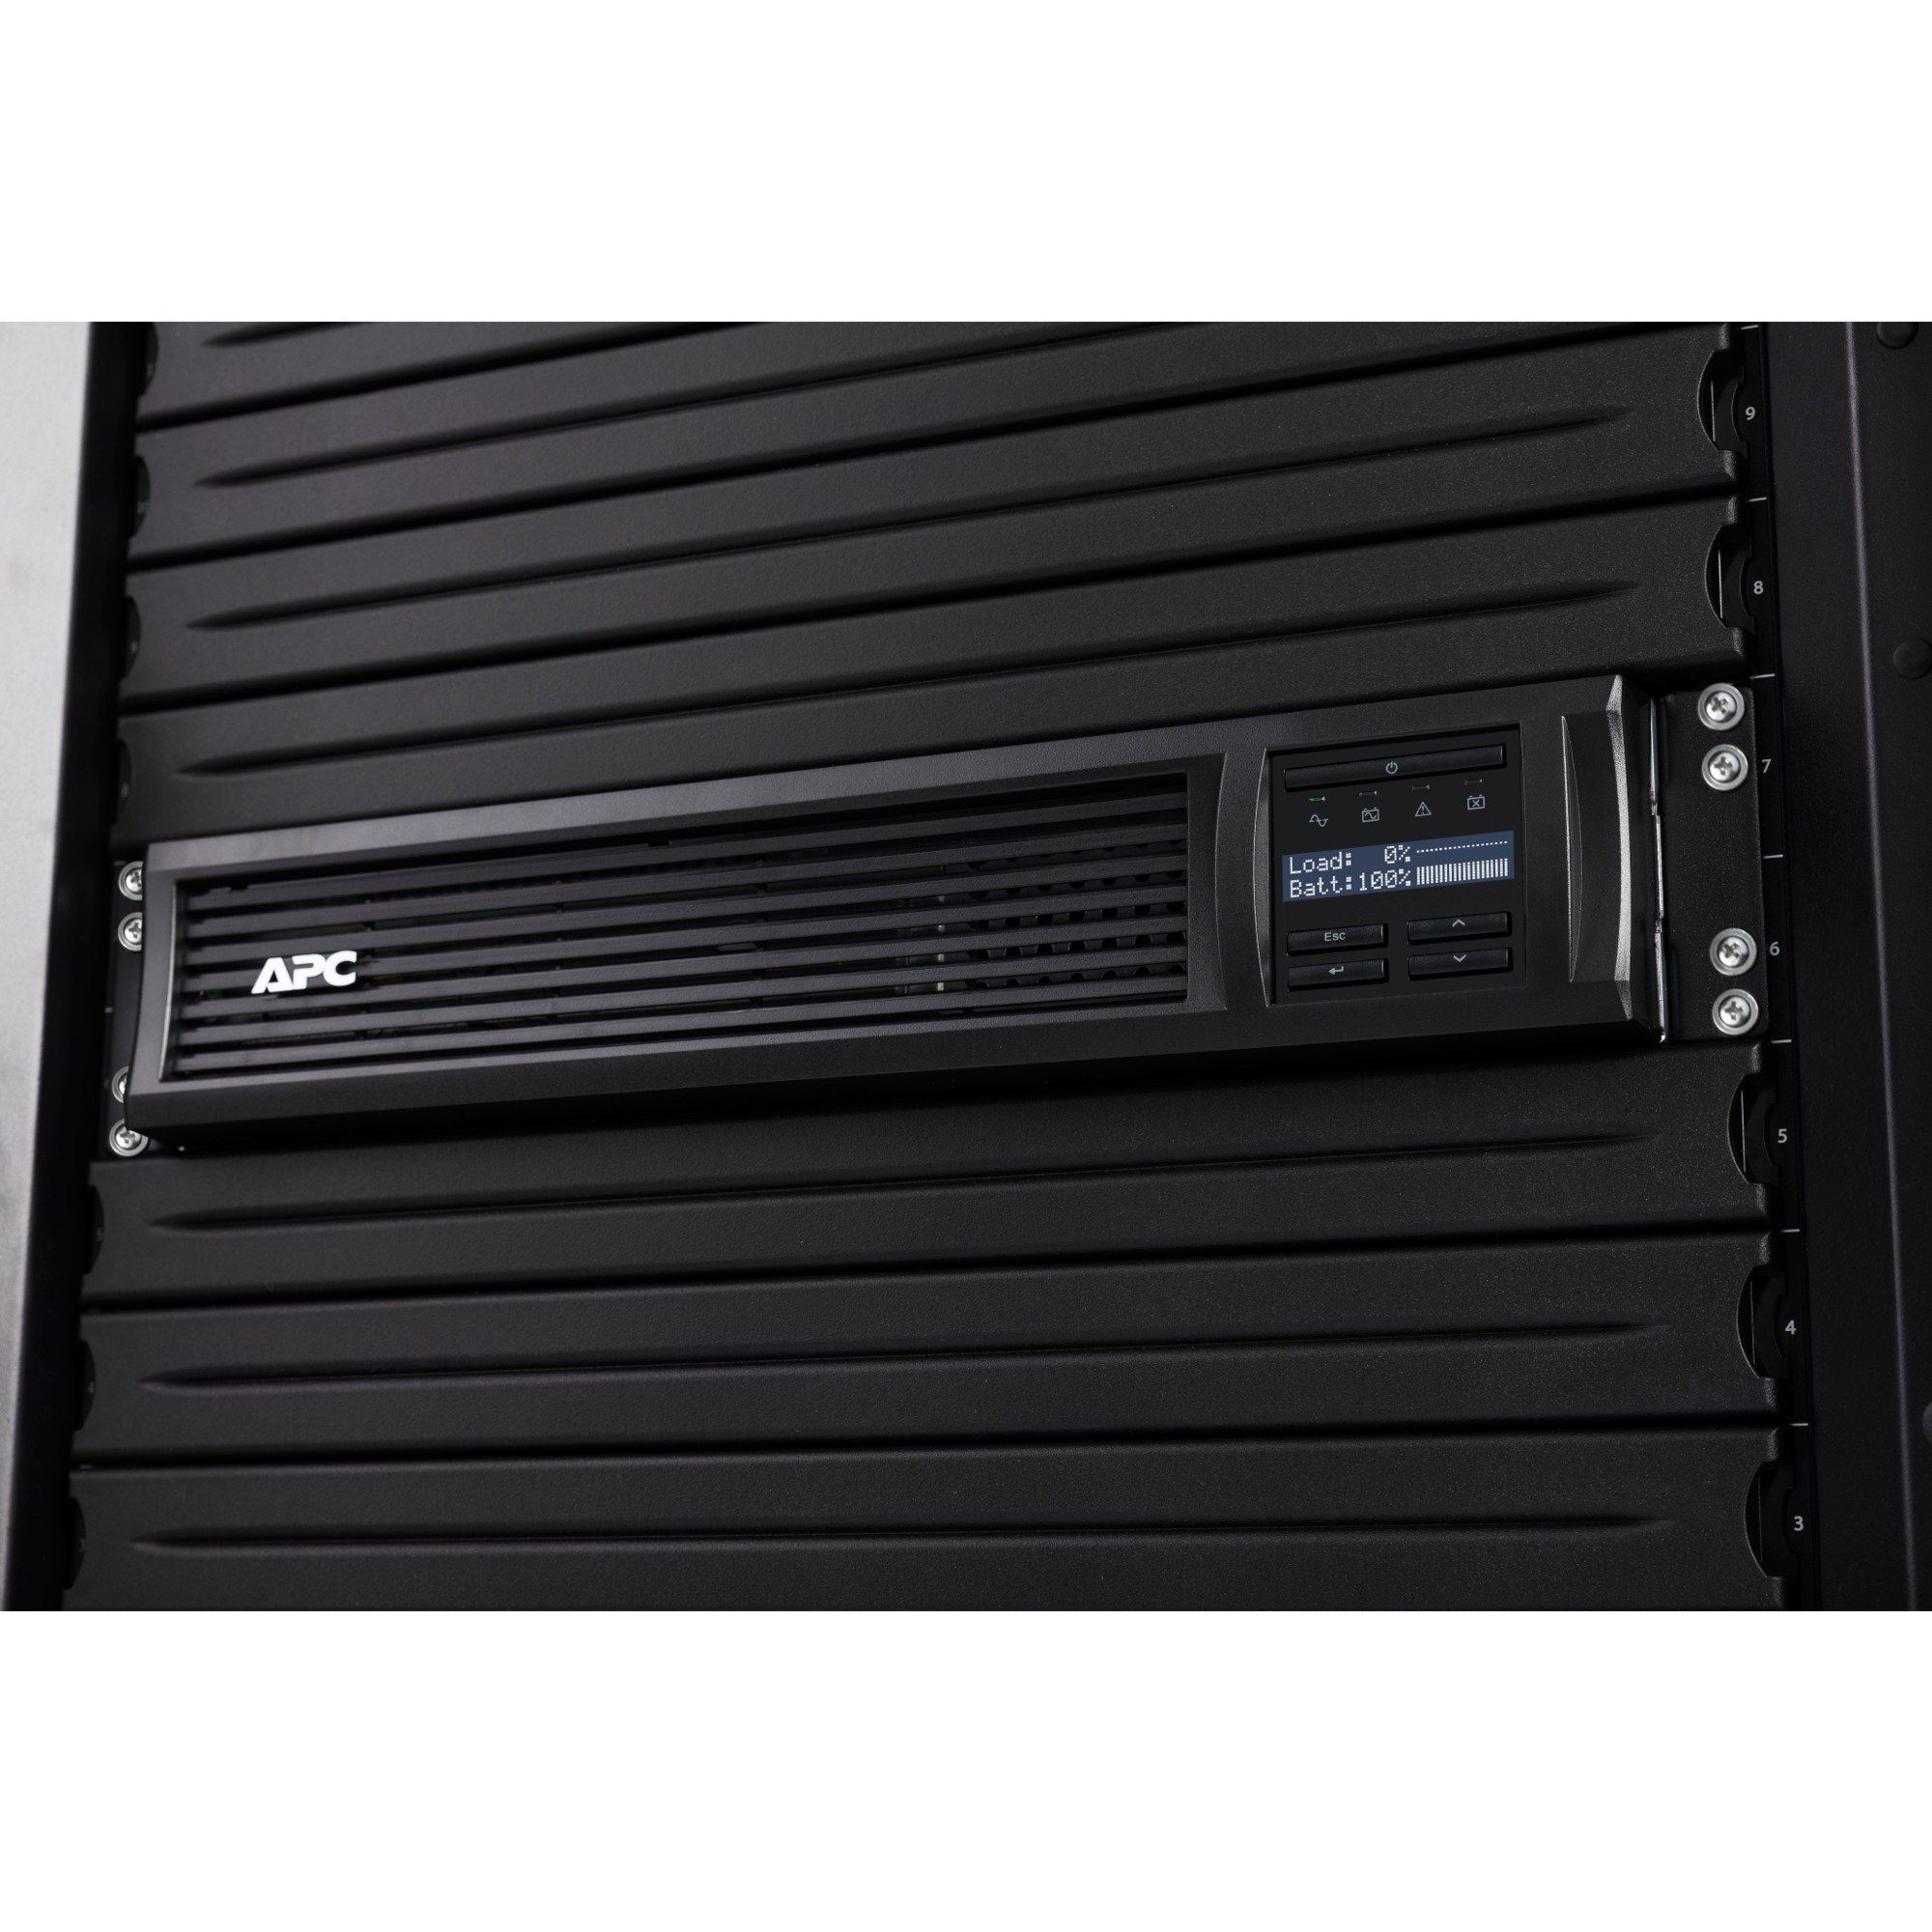 APC APC Smart-UPS 1500VA RM USV, Stromspeicher LCD 2U 230V, (mit